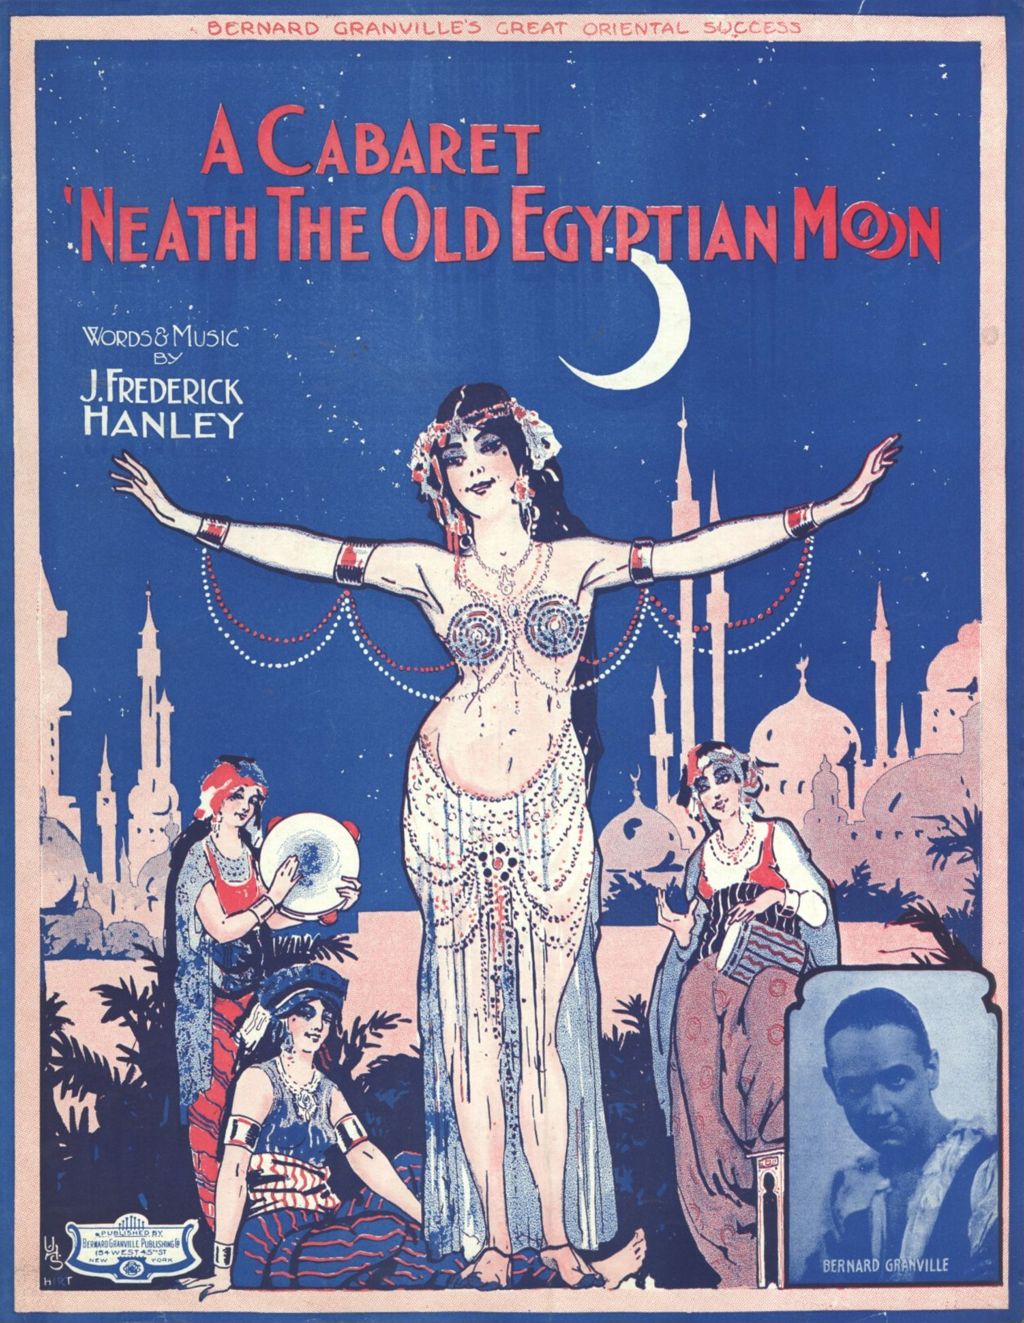 Miniature of Cabaret 'Neath the Old Egyptian Moon